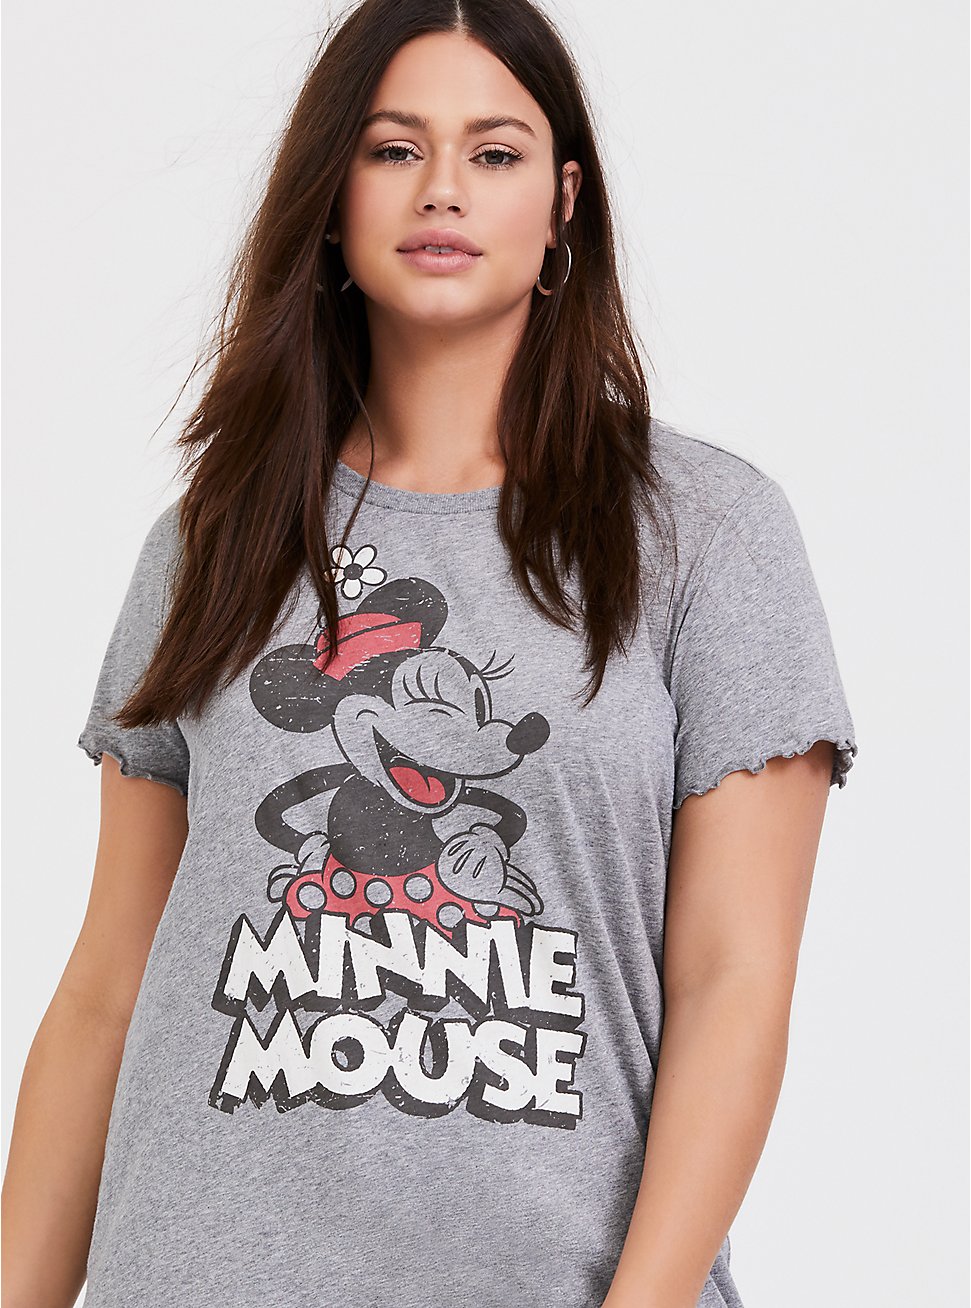 Disney Minnie Mouse Heathered Grey Crew Top, HEATHER GREY, hi-res